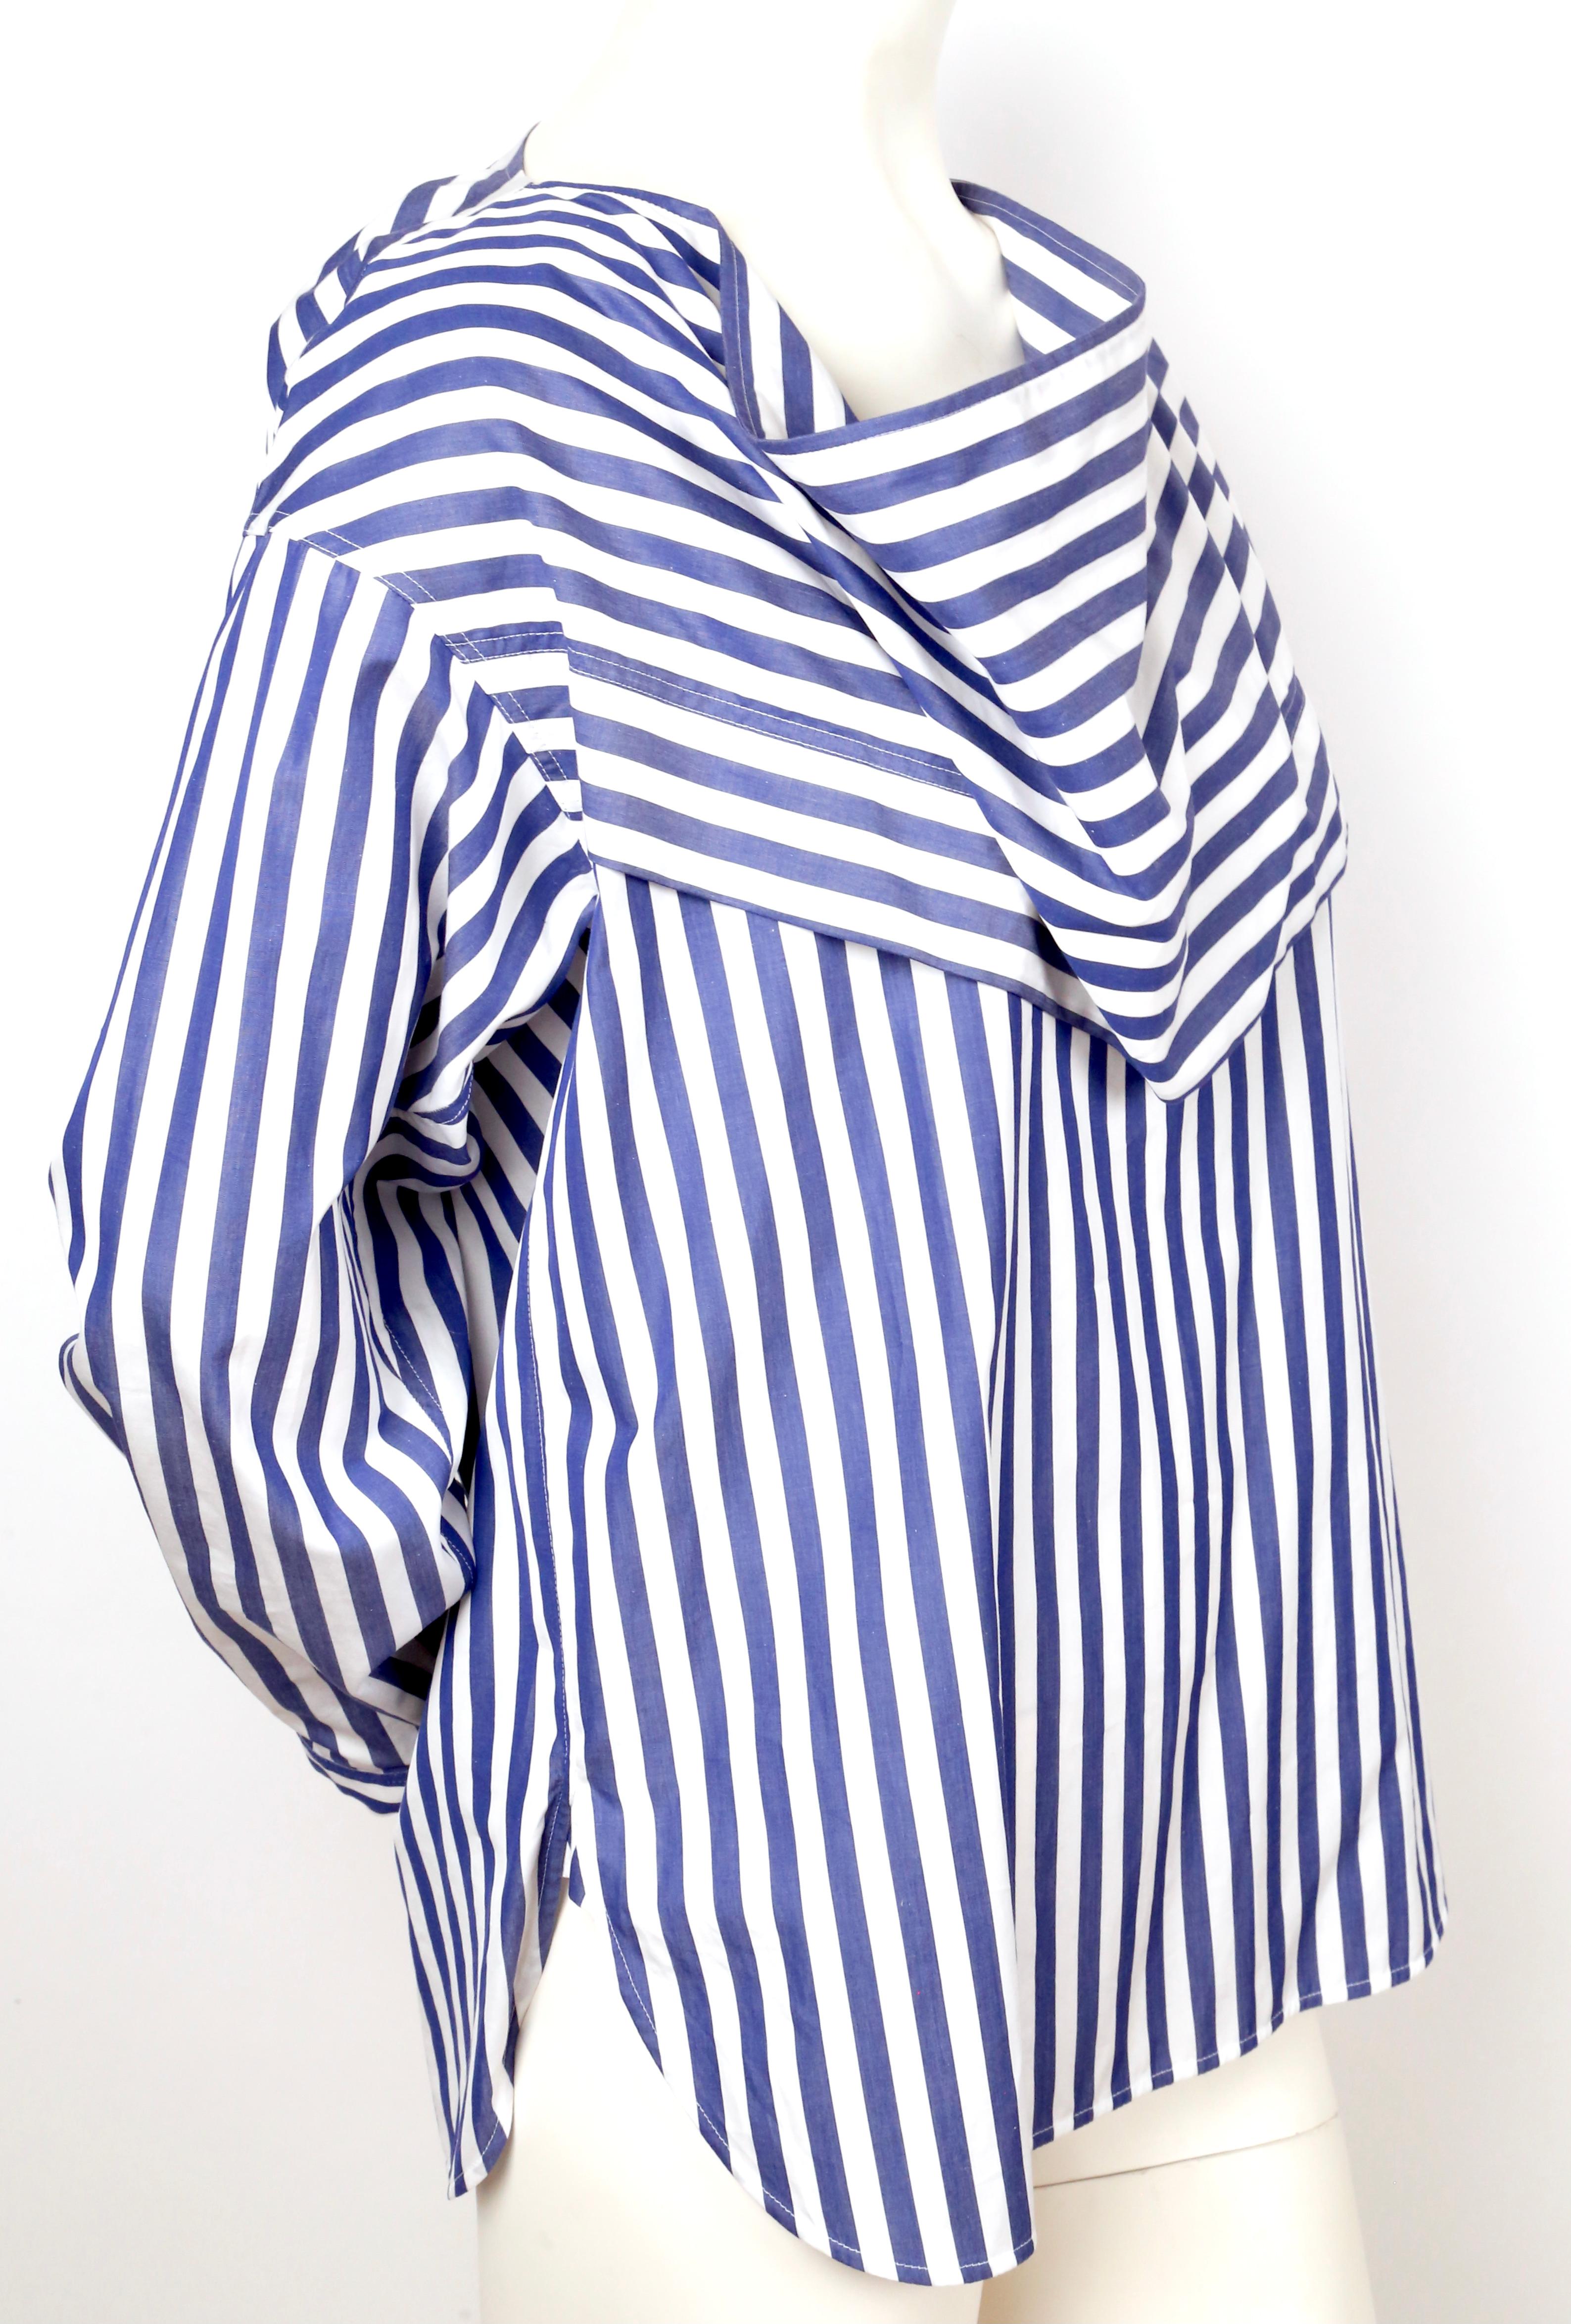 celine blue striped shirt